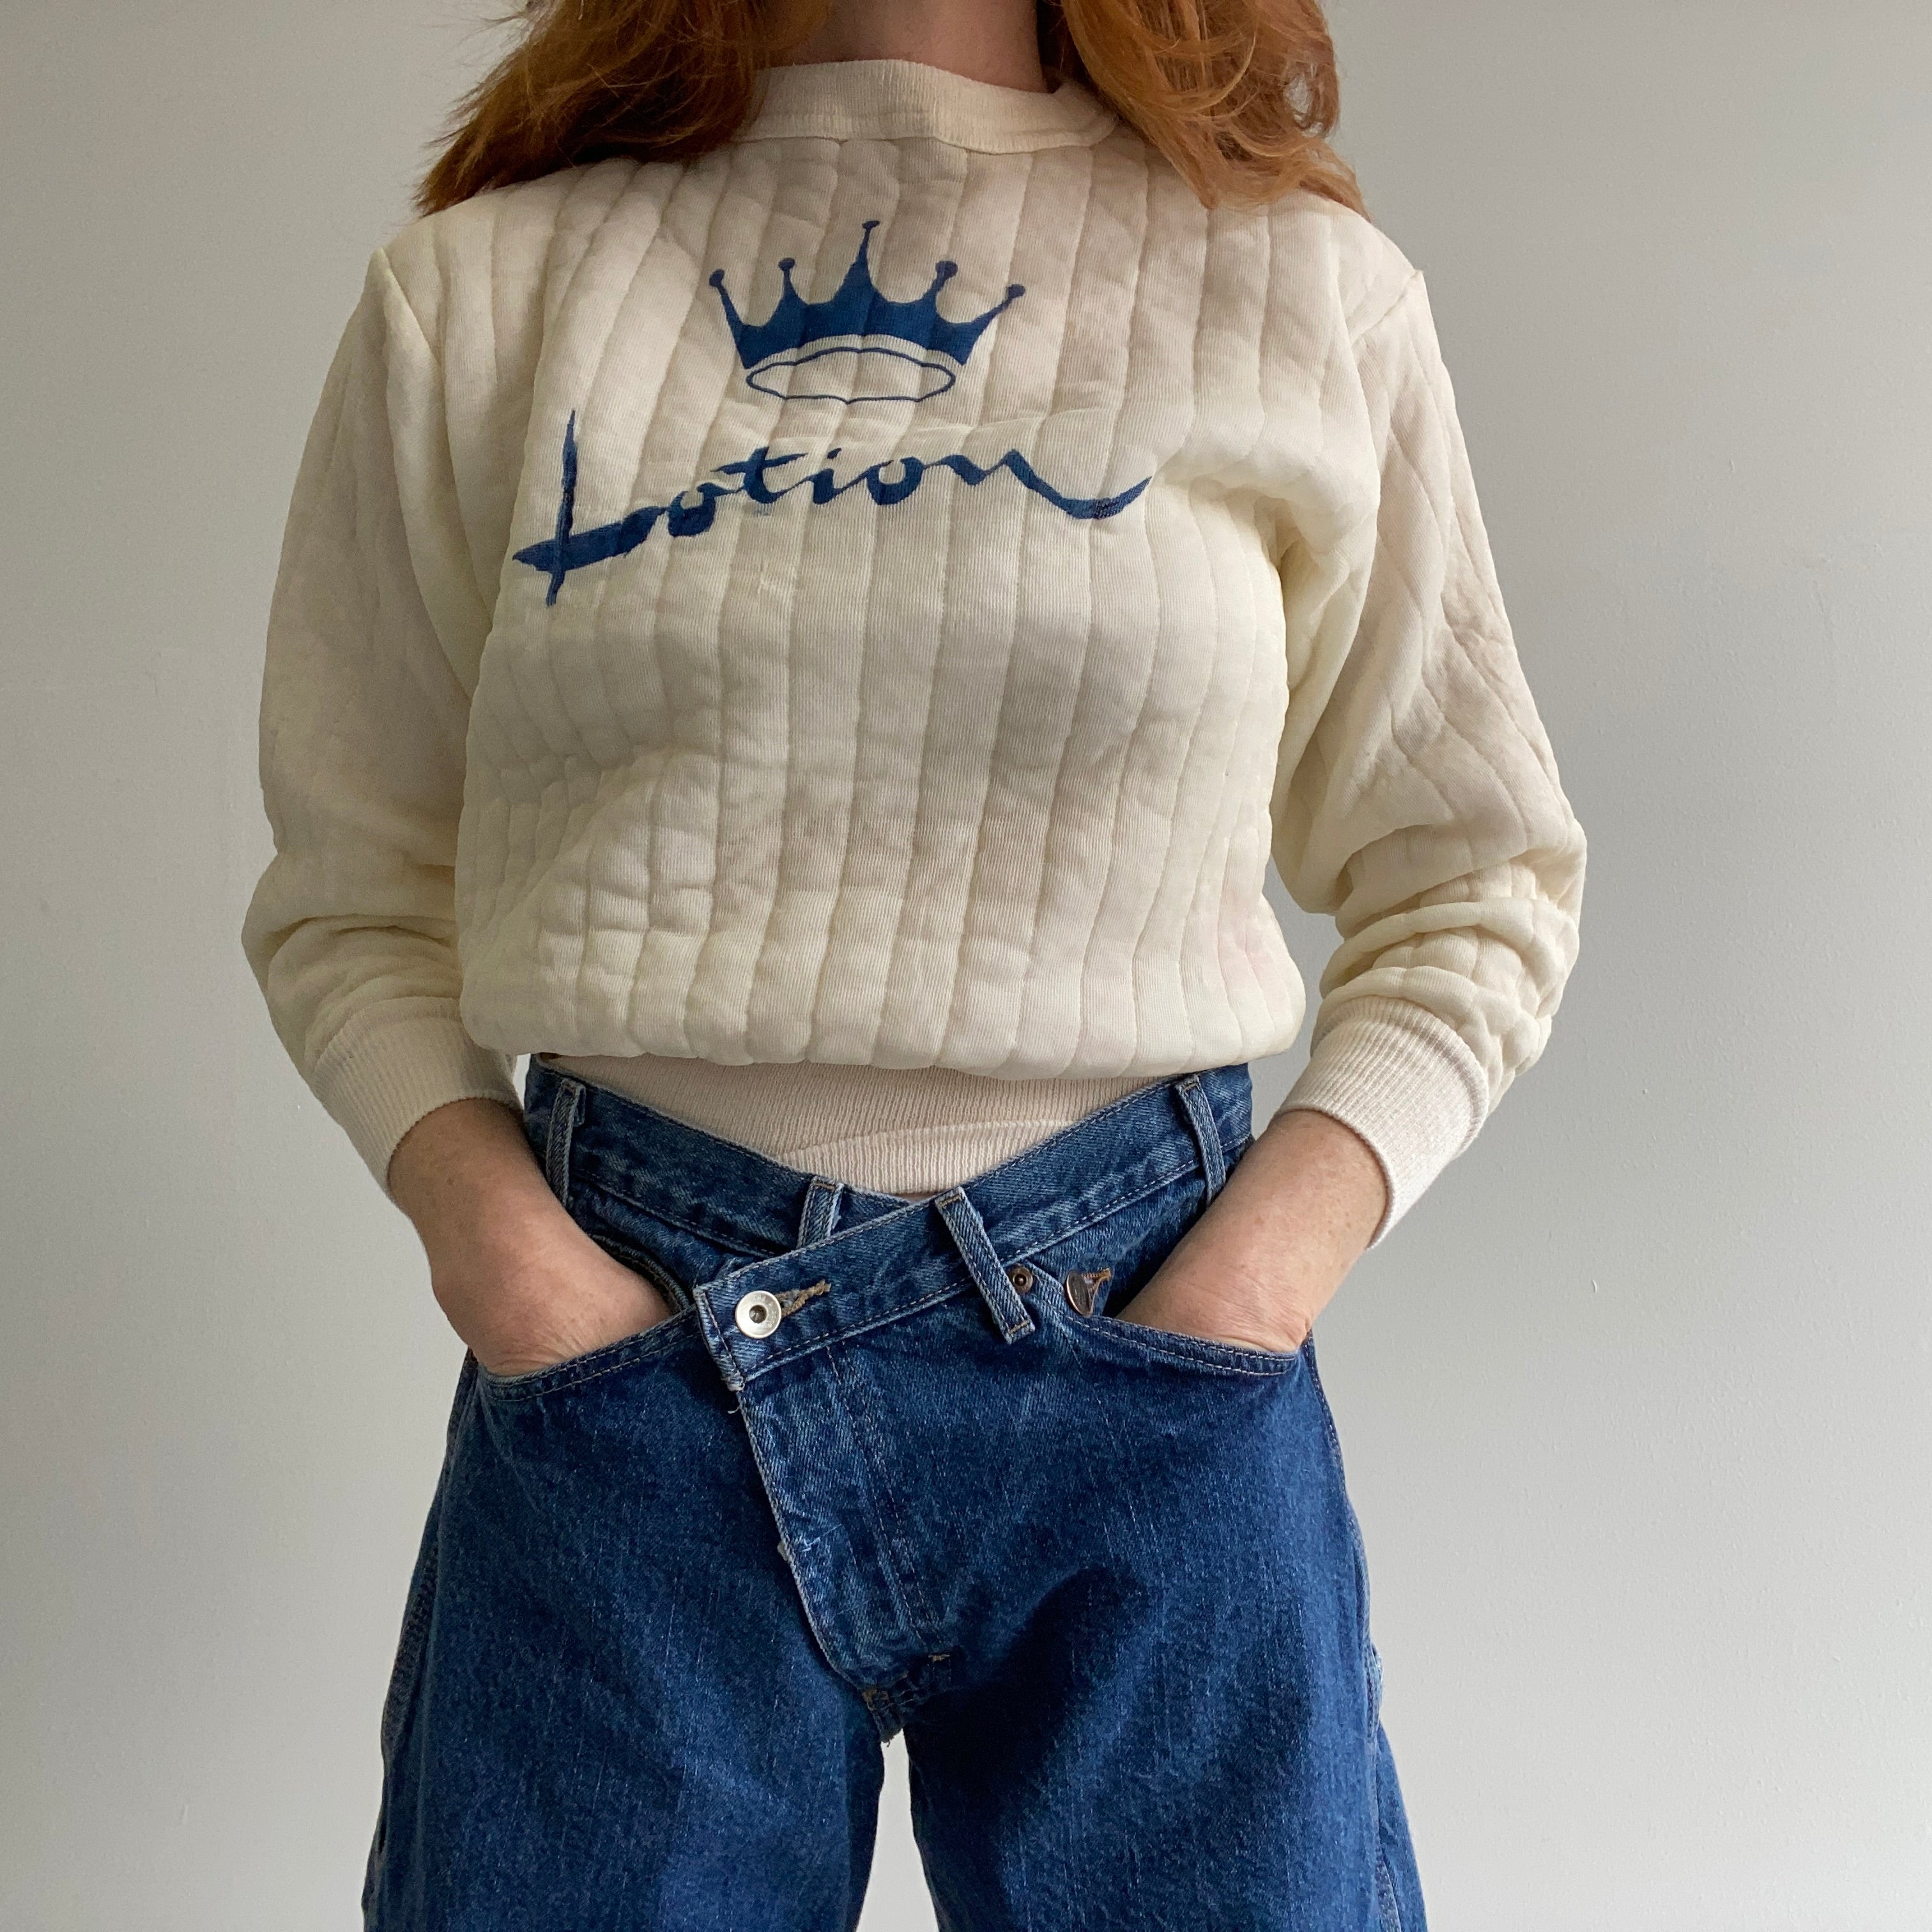 1980s Thermal Liner Sweatshirt with Weird DIY 